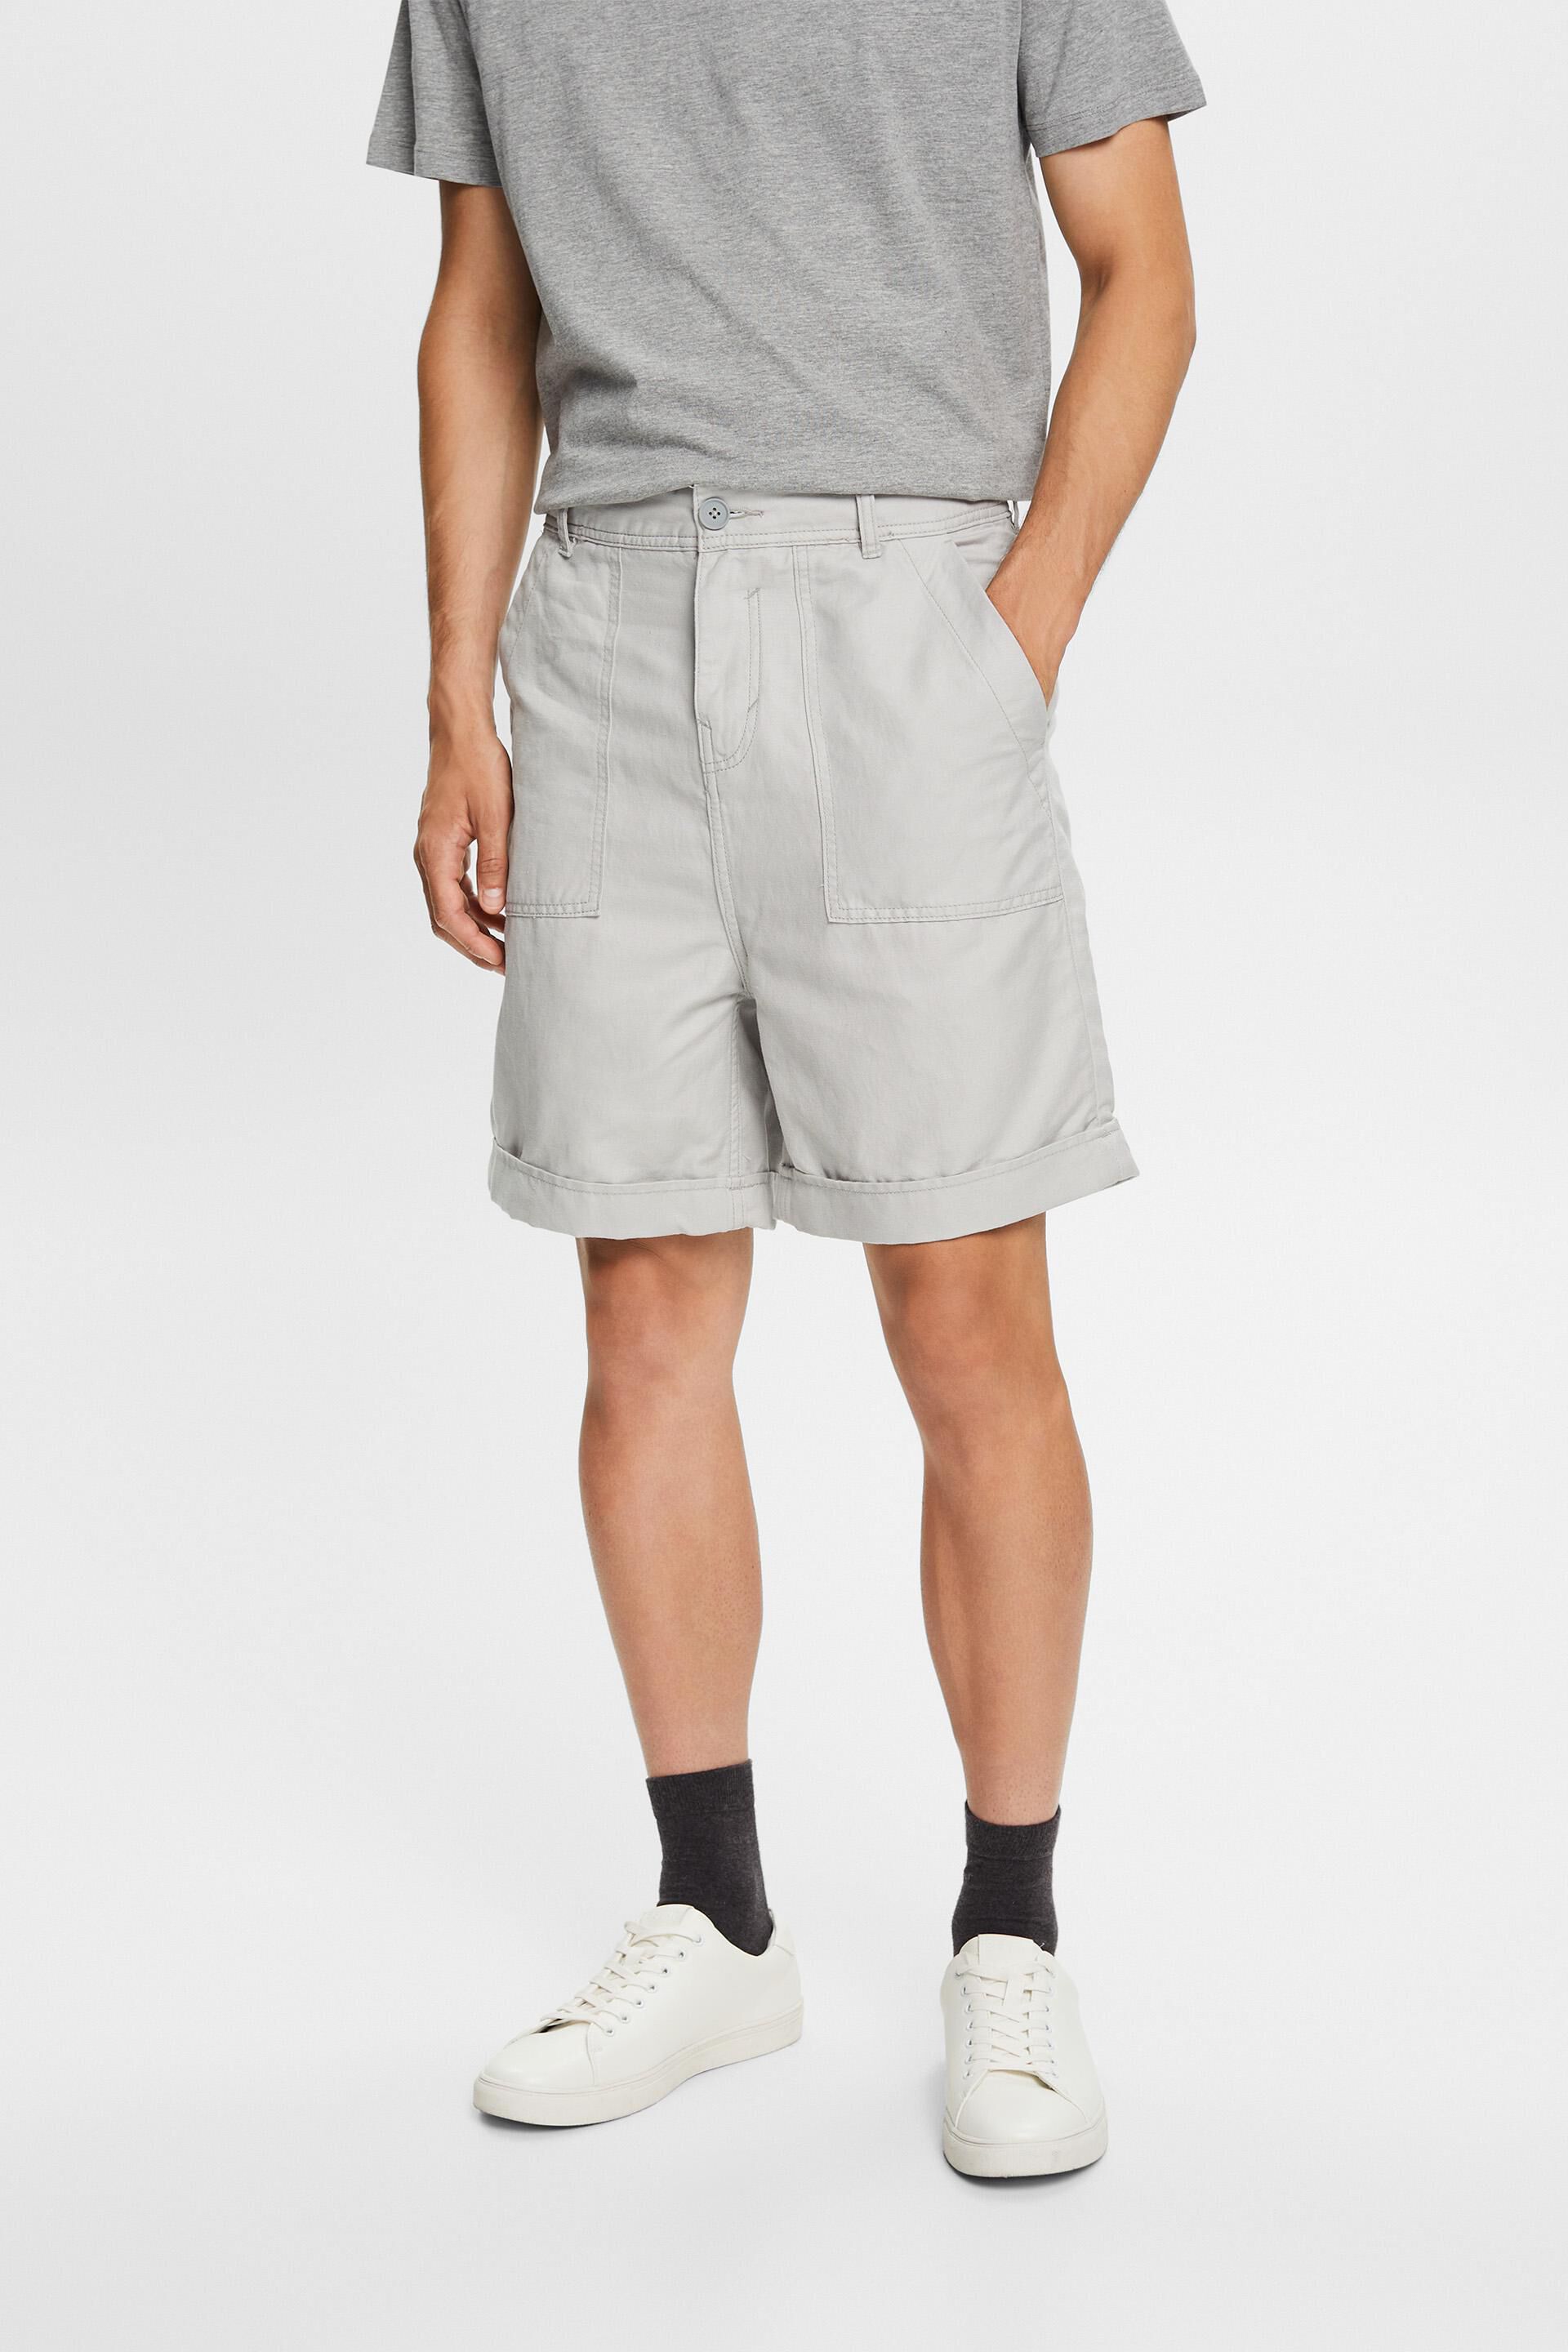 Esprit shorts, Bermuda blend cotton-linen